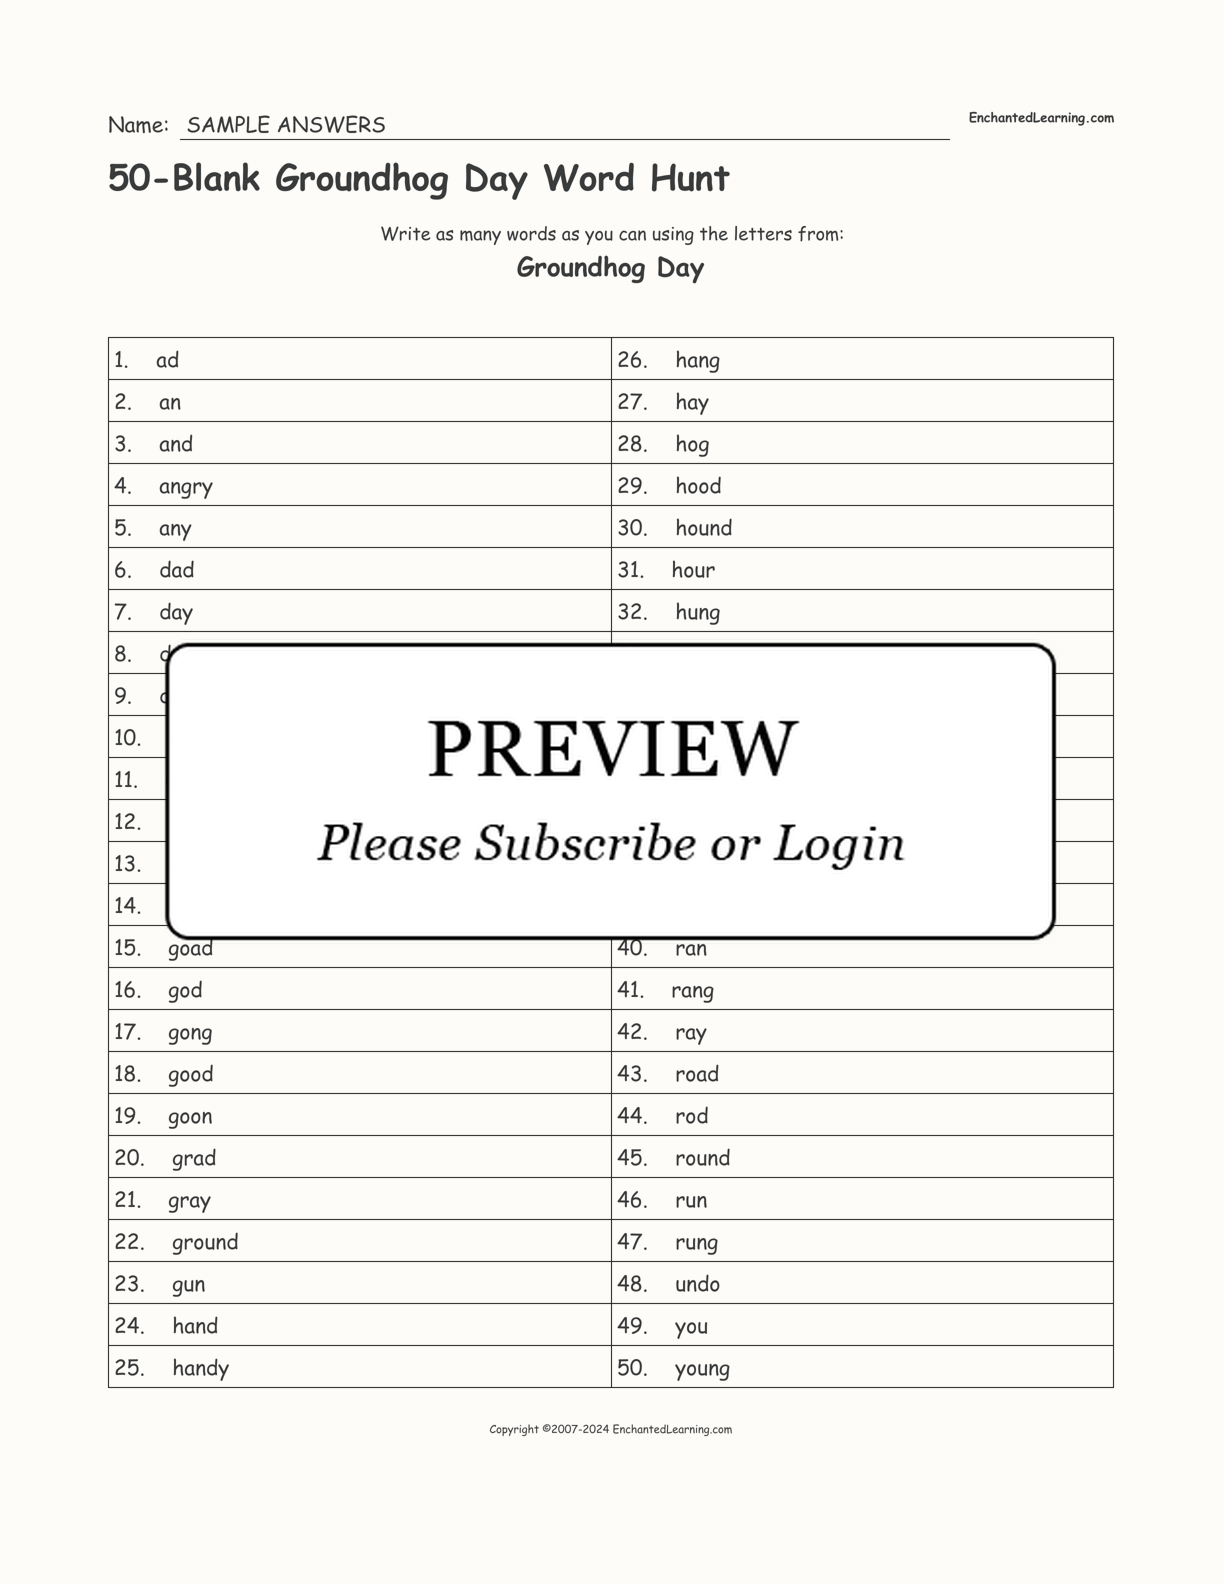 50-Blank Groundhog Day Word Hunt interactive worksheet page 2